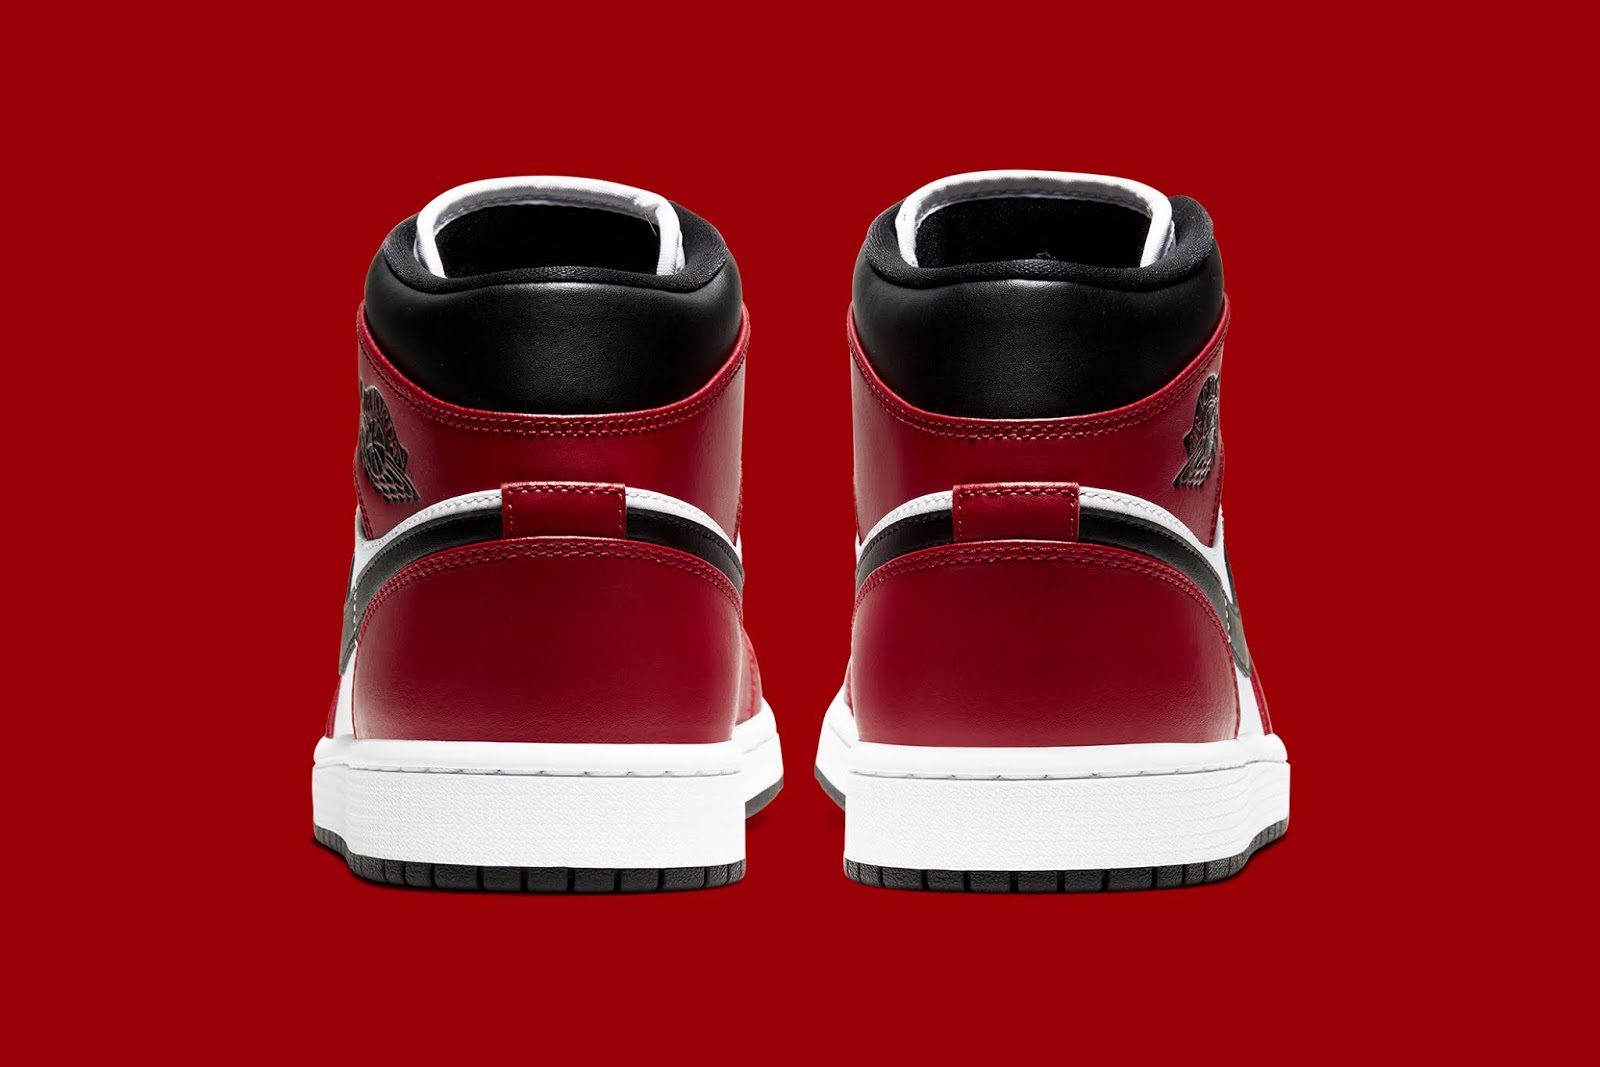 Swag Craze: First Look: Air Jordan 1 Mid - 'Chicago Black Toe'